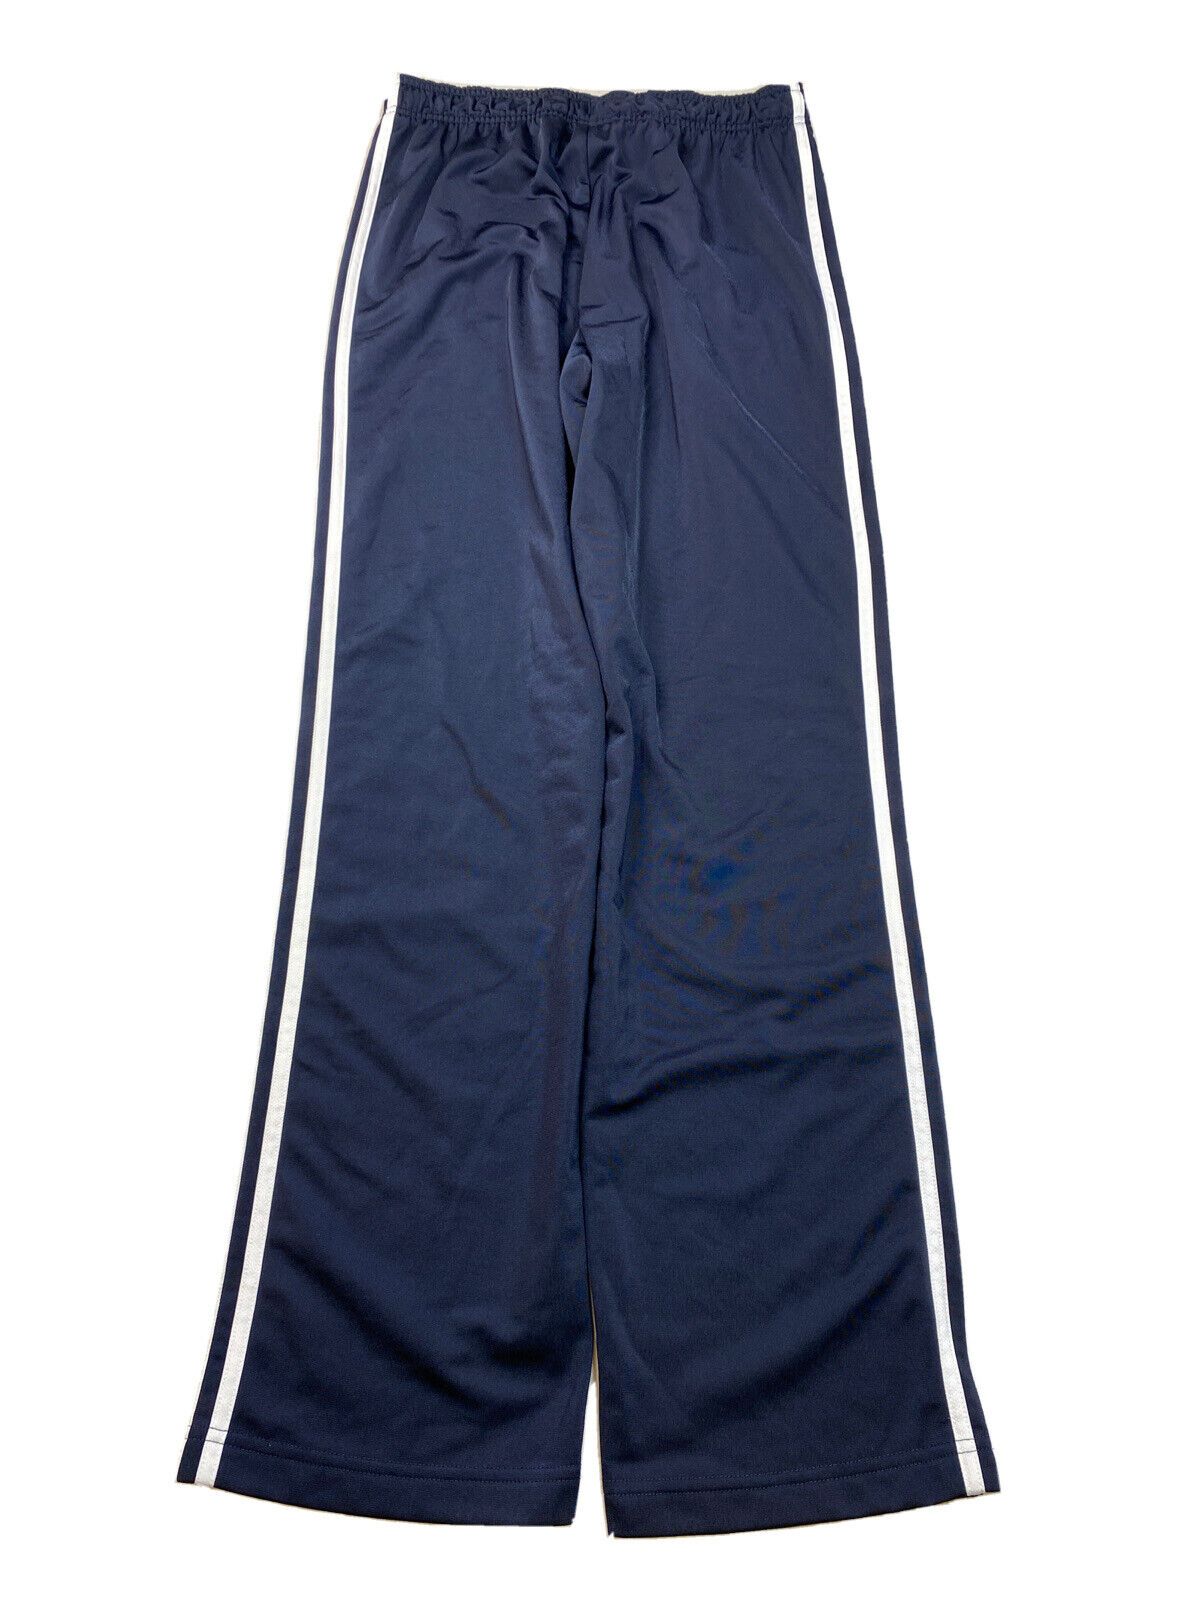 Adidas Men's Blue Essential Tricot Athletic Track Pants - M